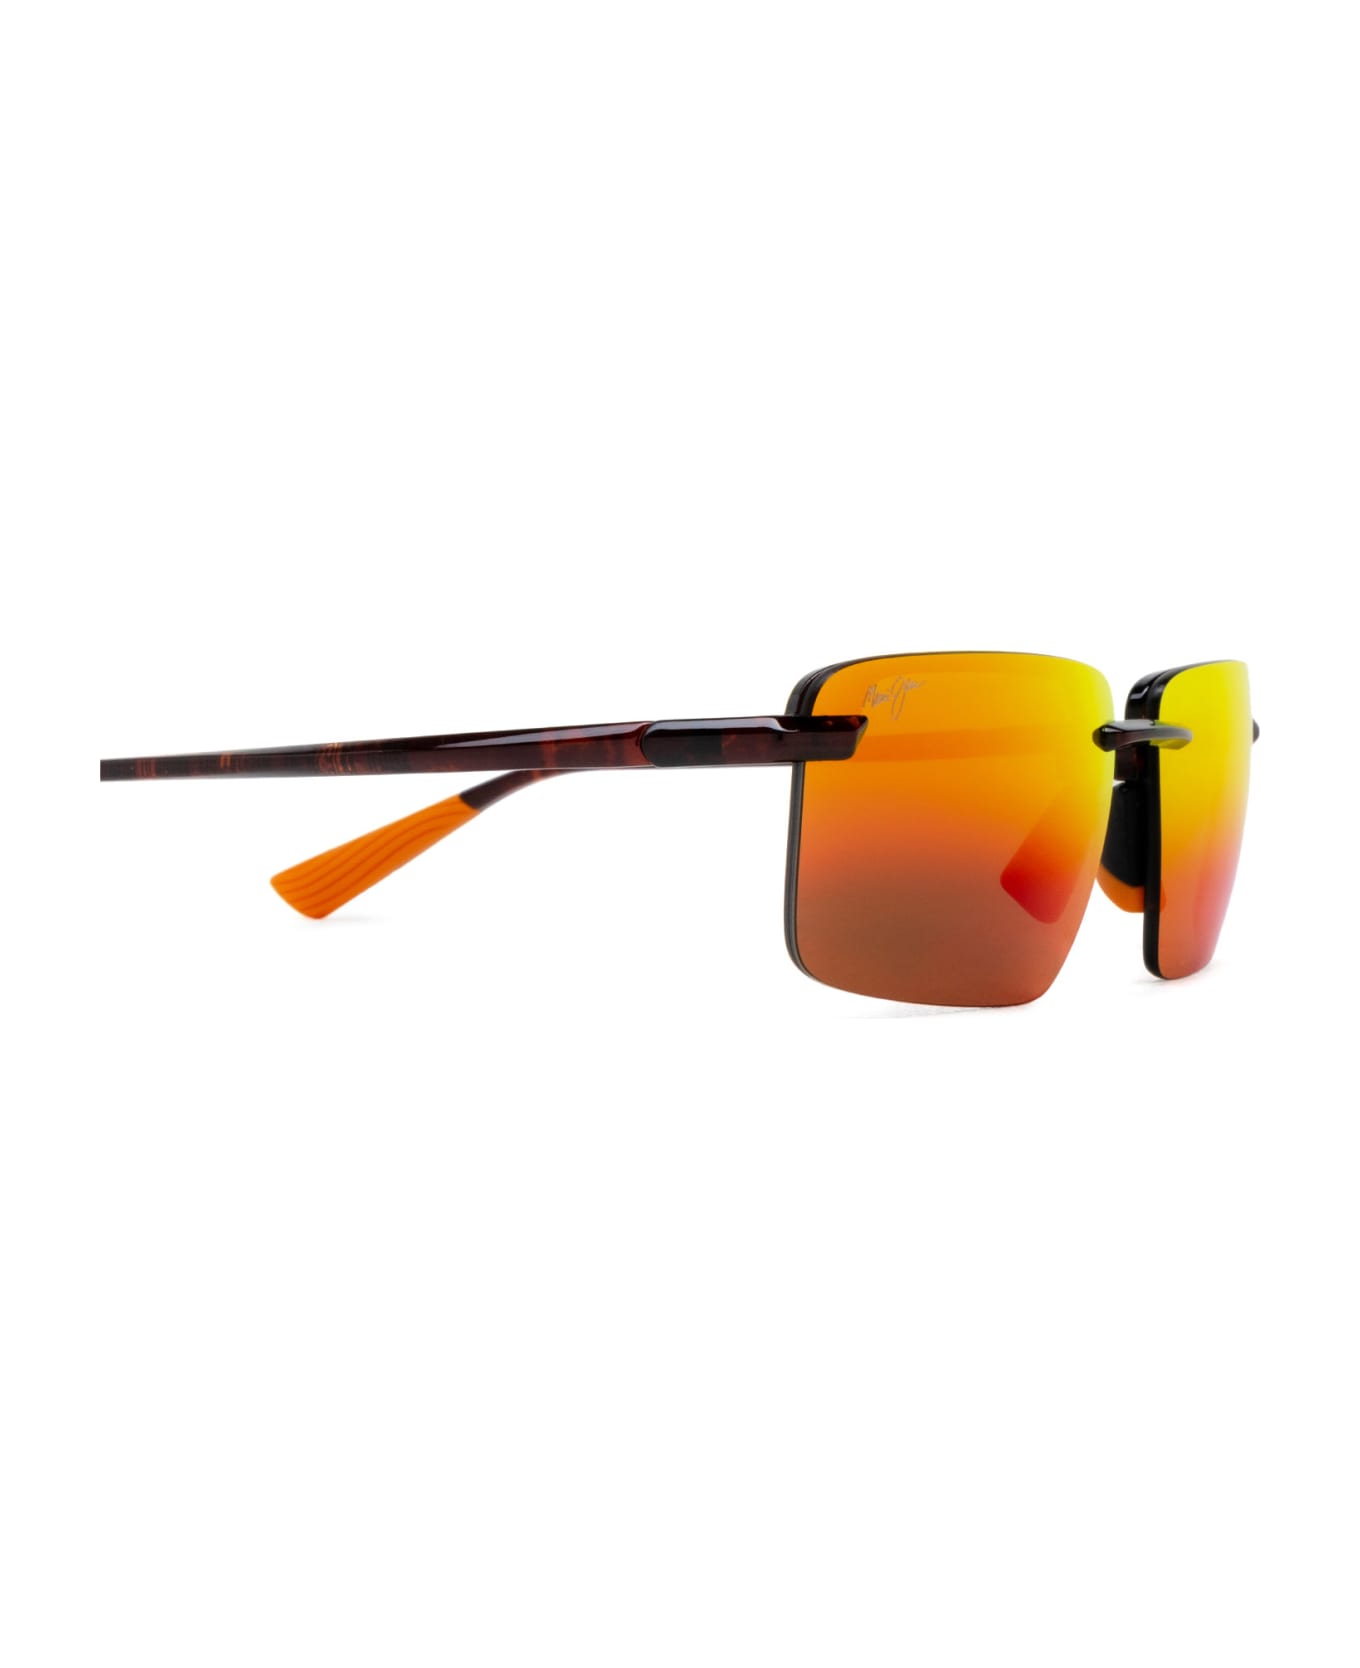 Maui Jim Mj626 Shiny Reddish Sunglasses - Shiny Reddish